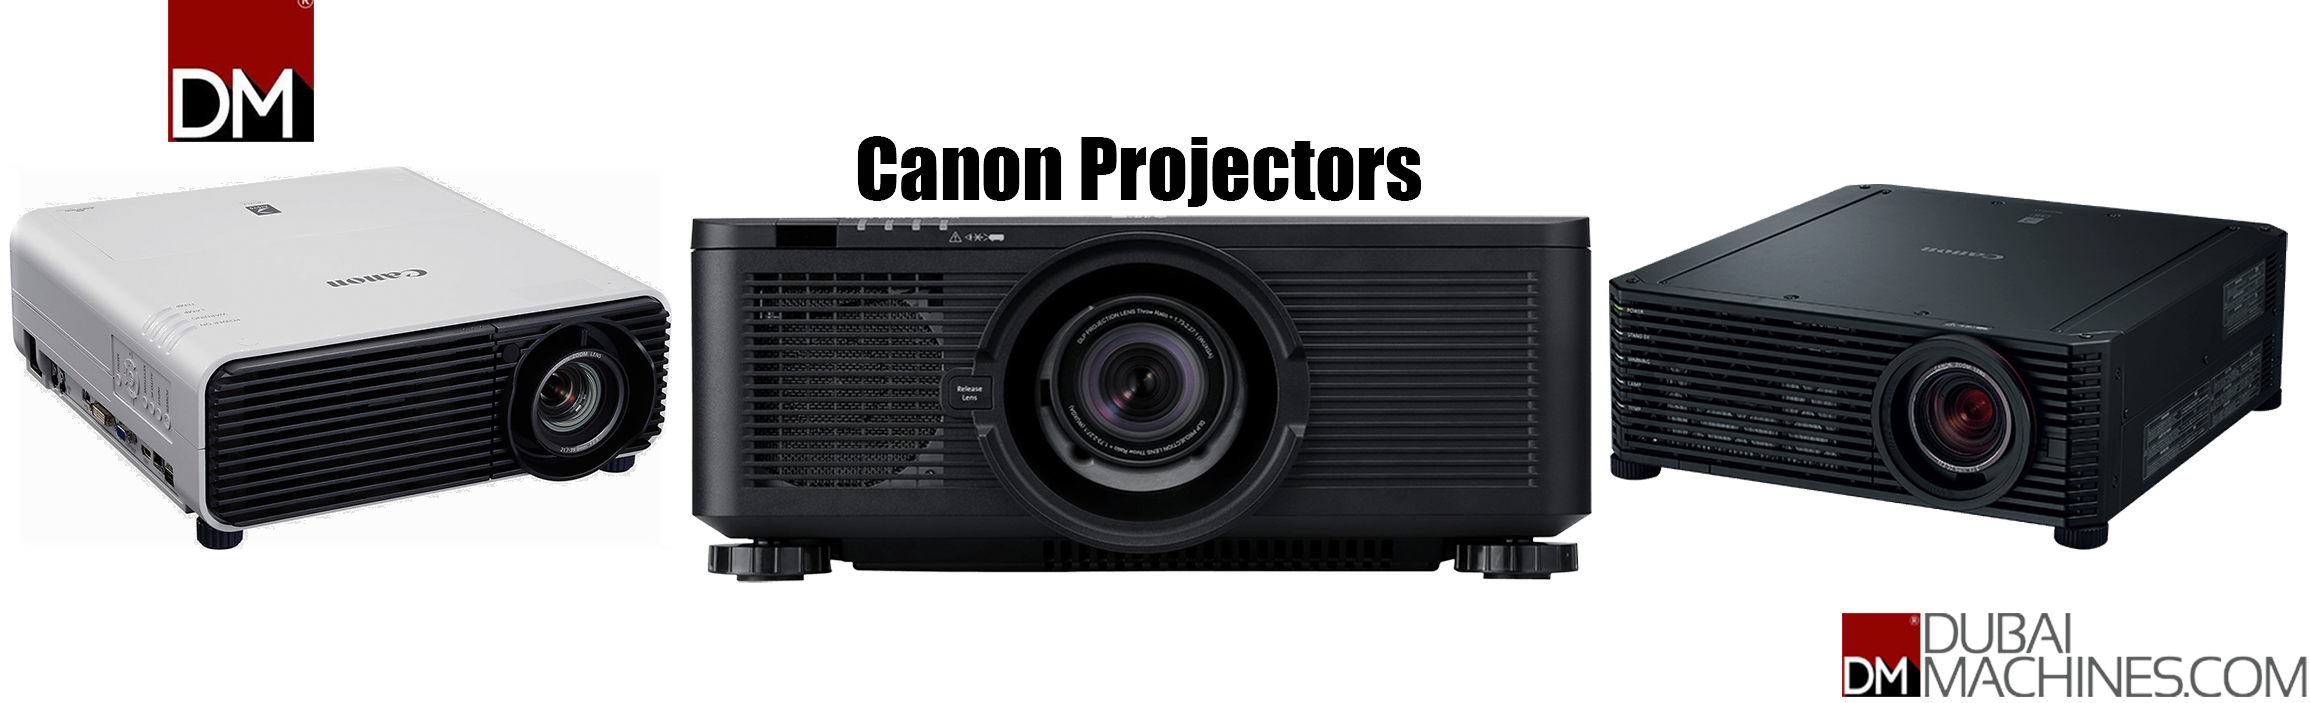 Canon projectors landing page